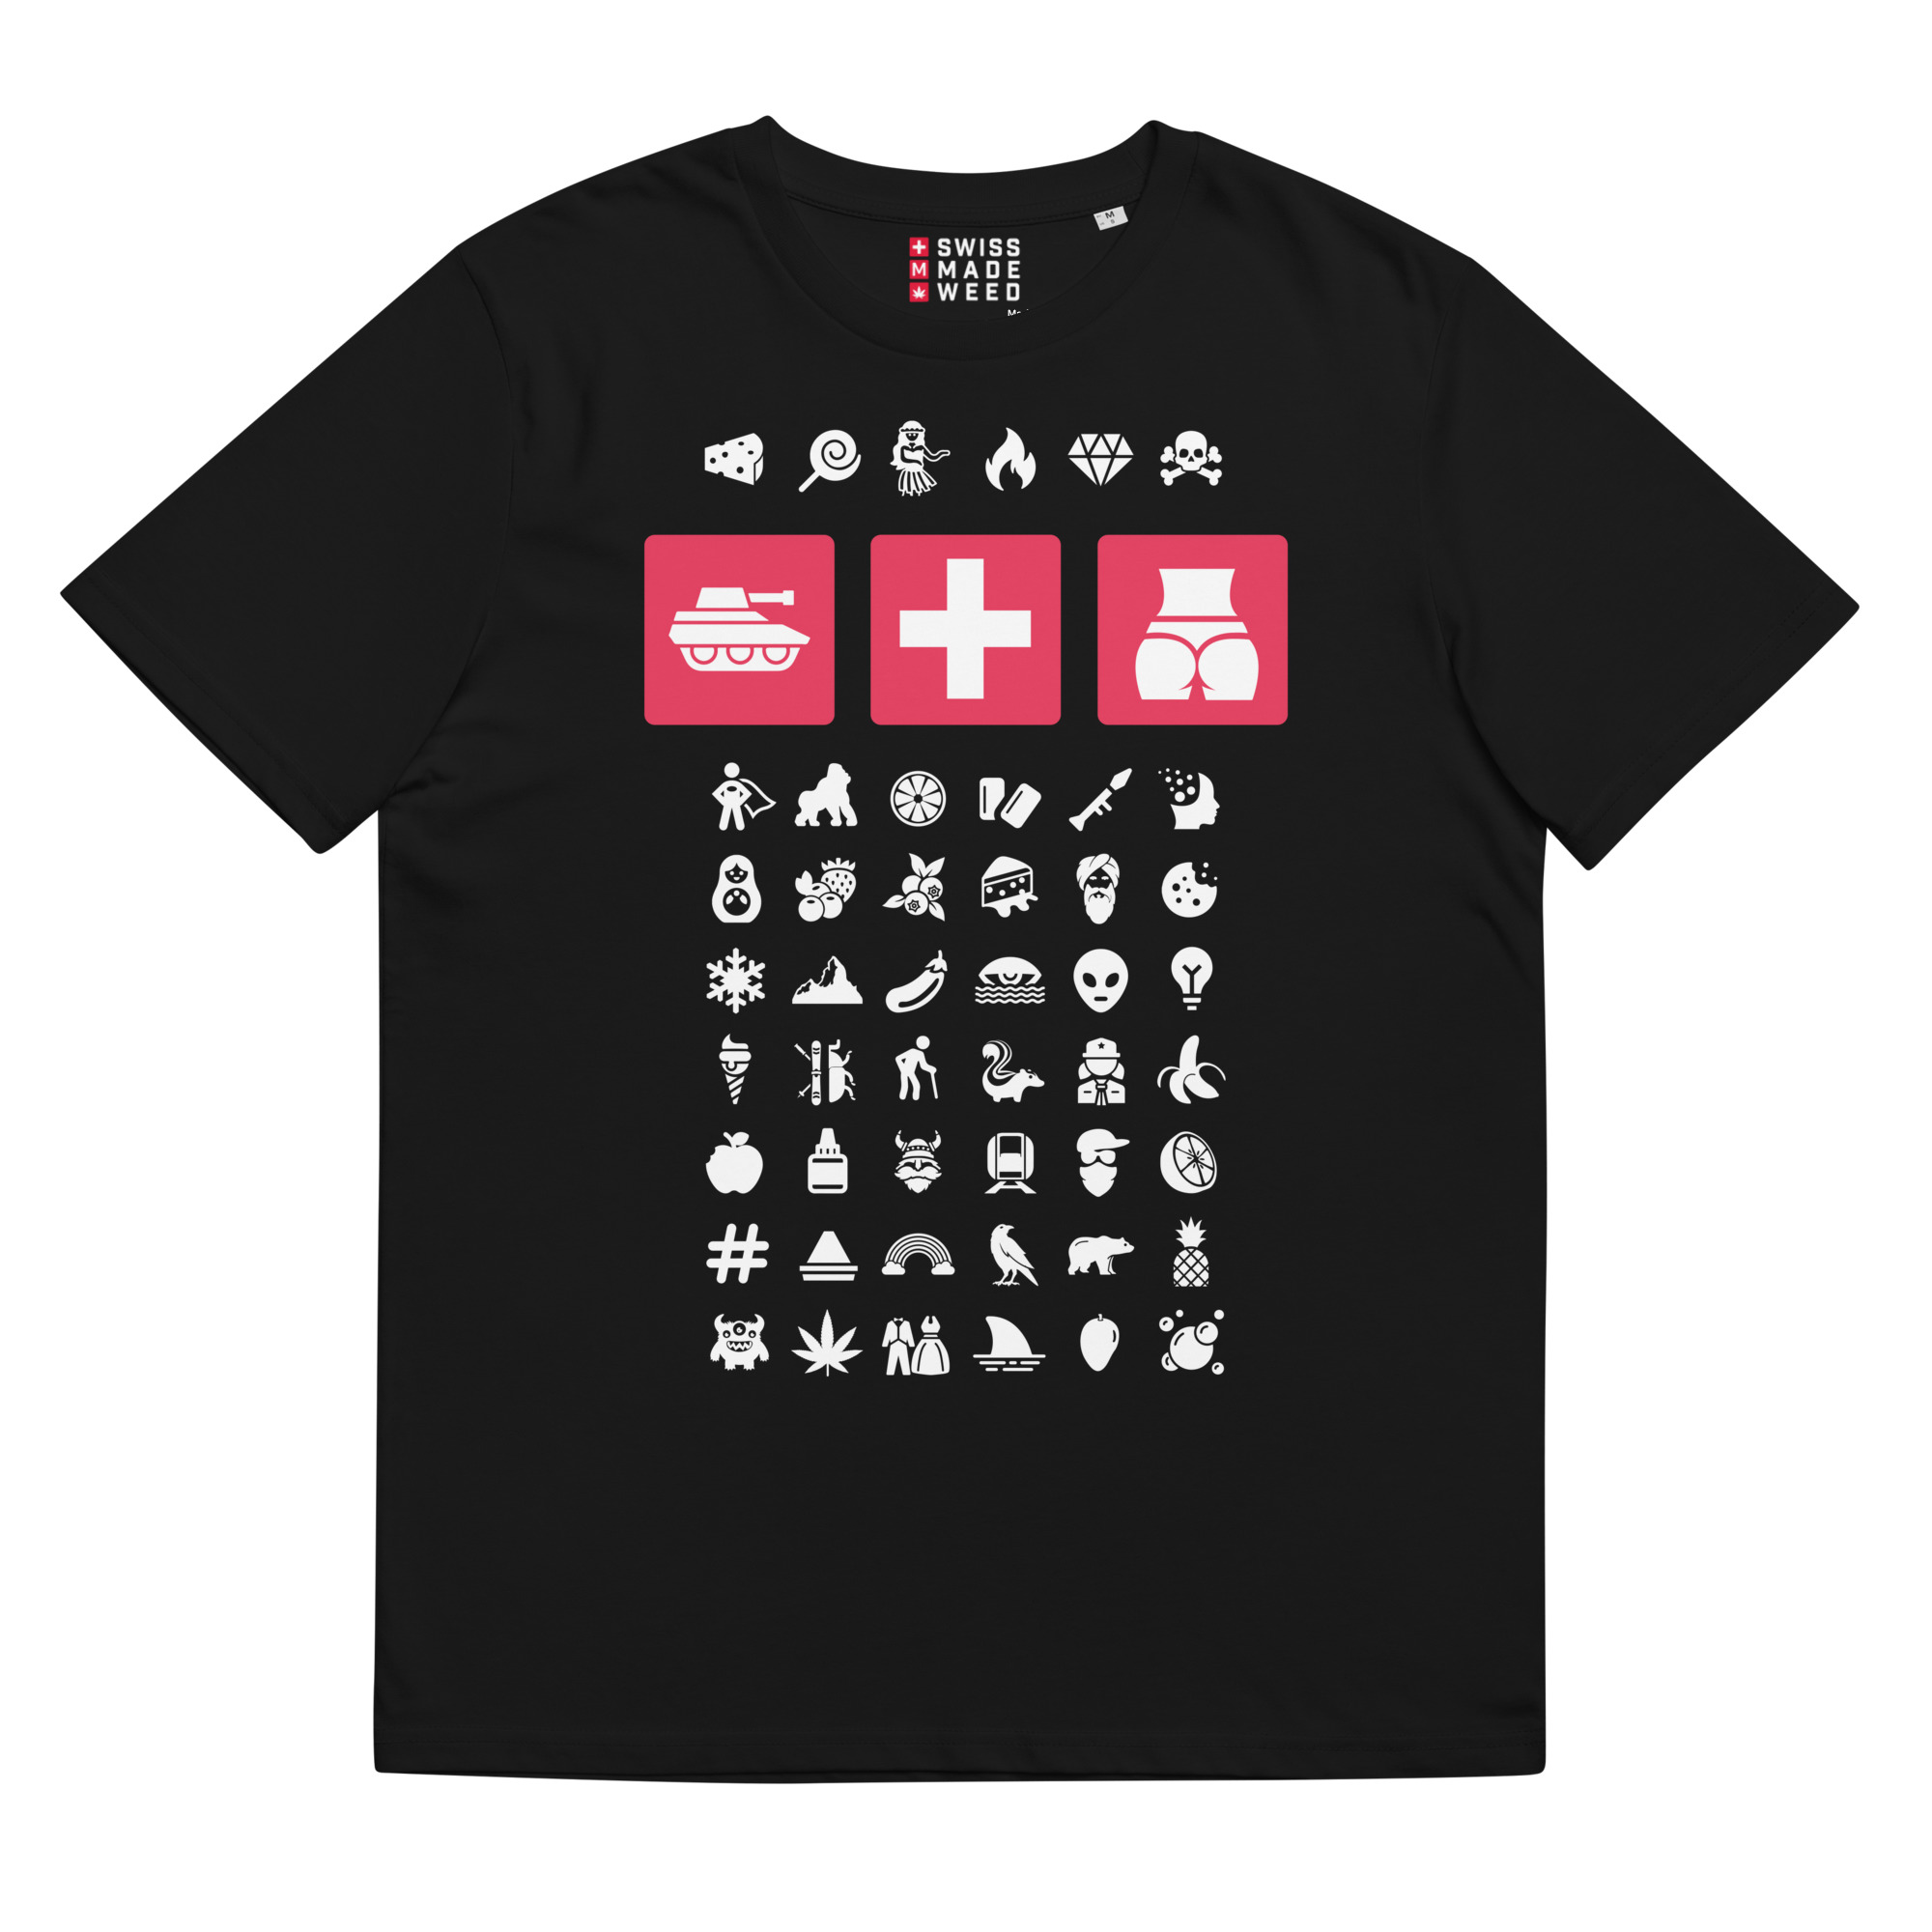 T-shirt – SMW – Charras T-Shirts Wearyt